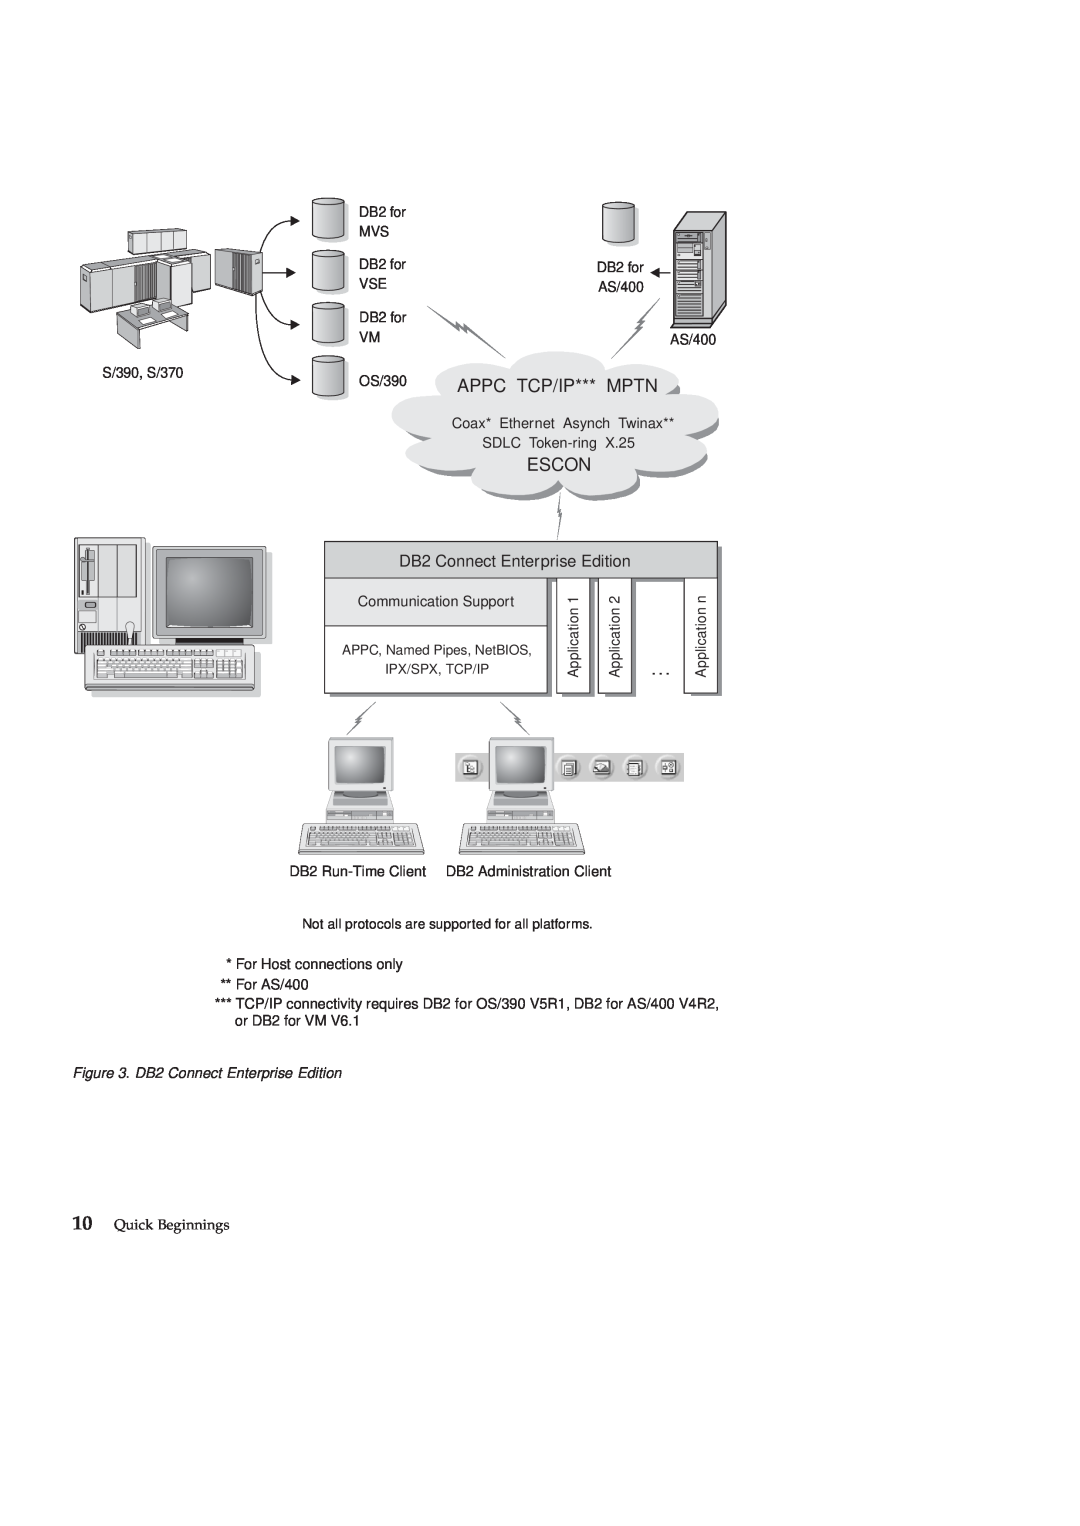 IBM GC09-2830-00 manual OS/390 APPC TCP/IP*** MPTN, Escon, DB2 Connect Enterprise Edition, Quick Beginnings 